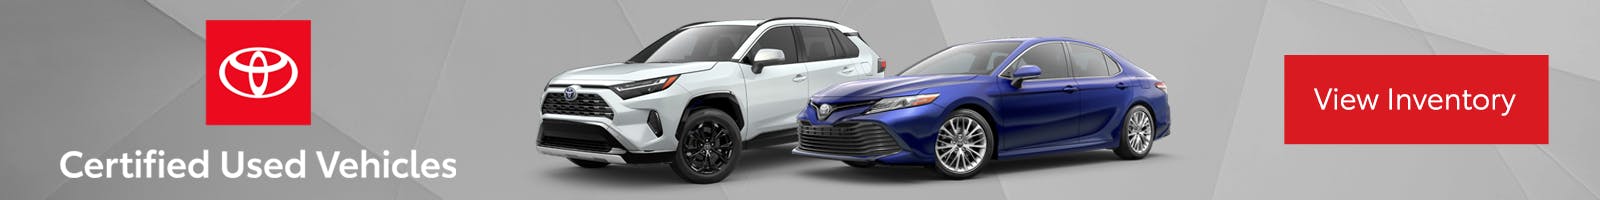 Certified Used Vehicles | Team Toyota of Glen Mills